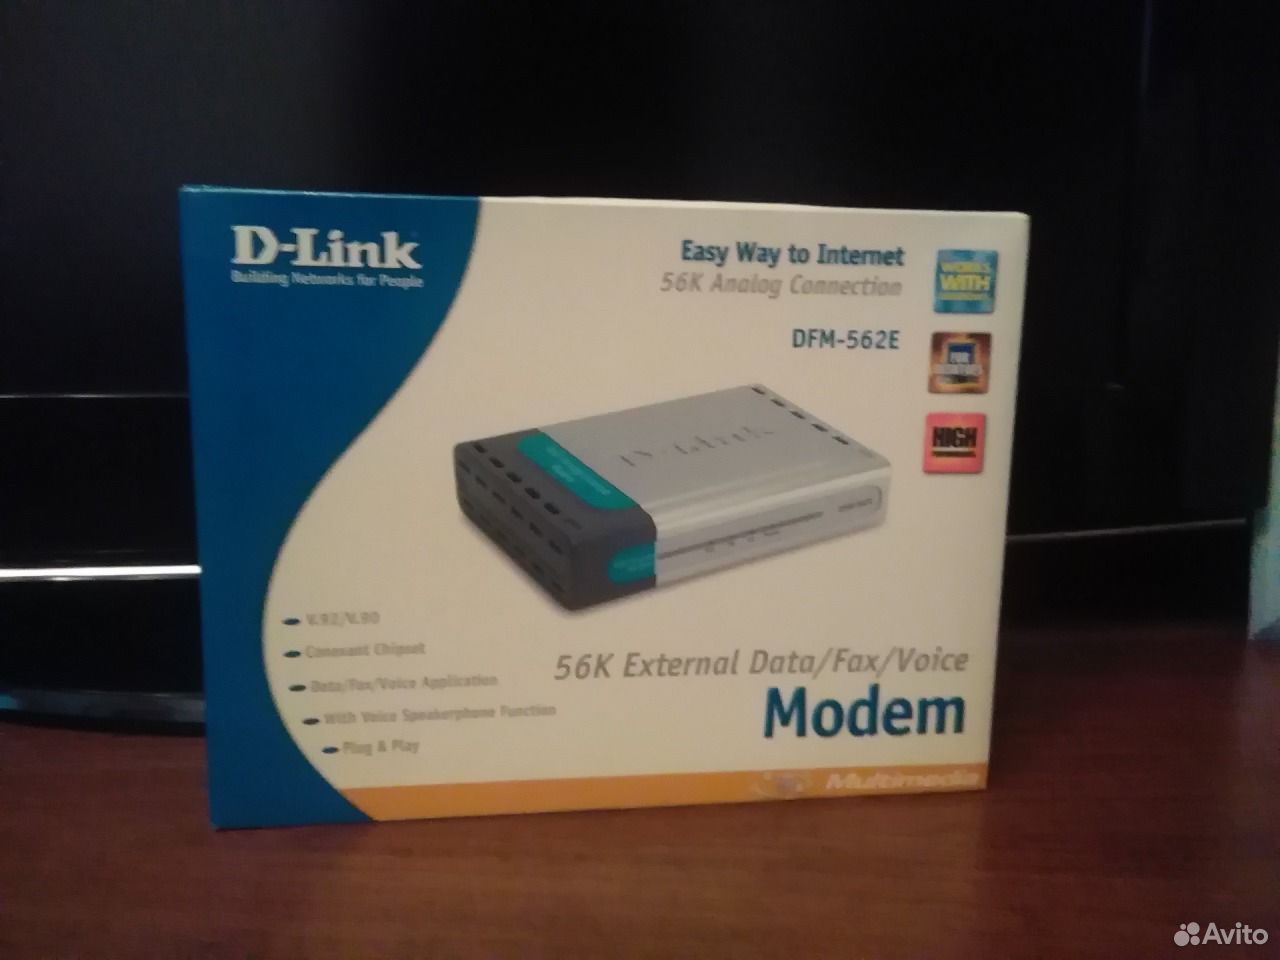 D-link Dfm-562e External Modem Driver For Mac